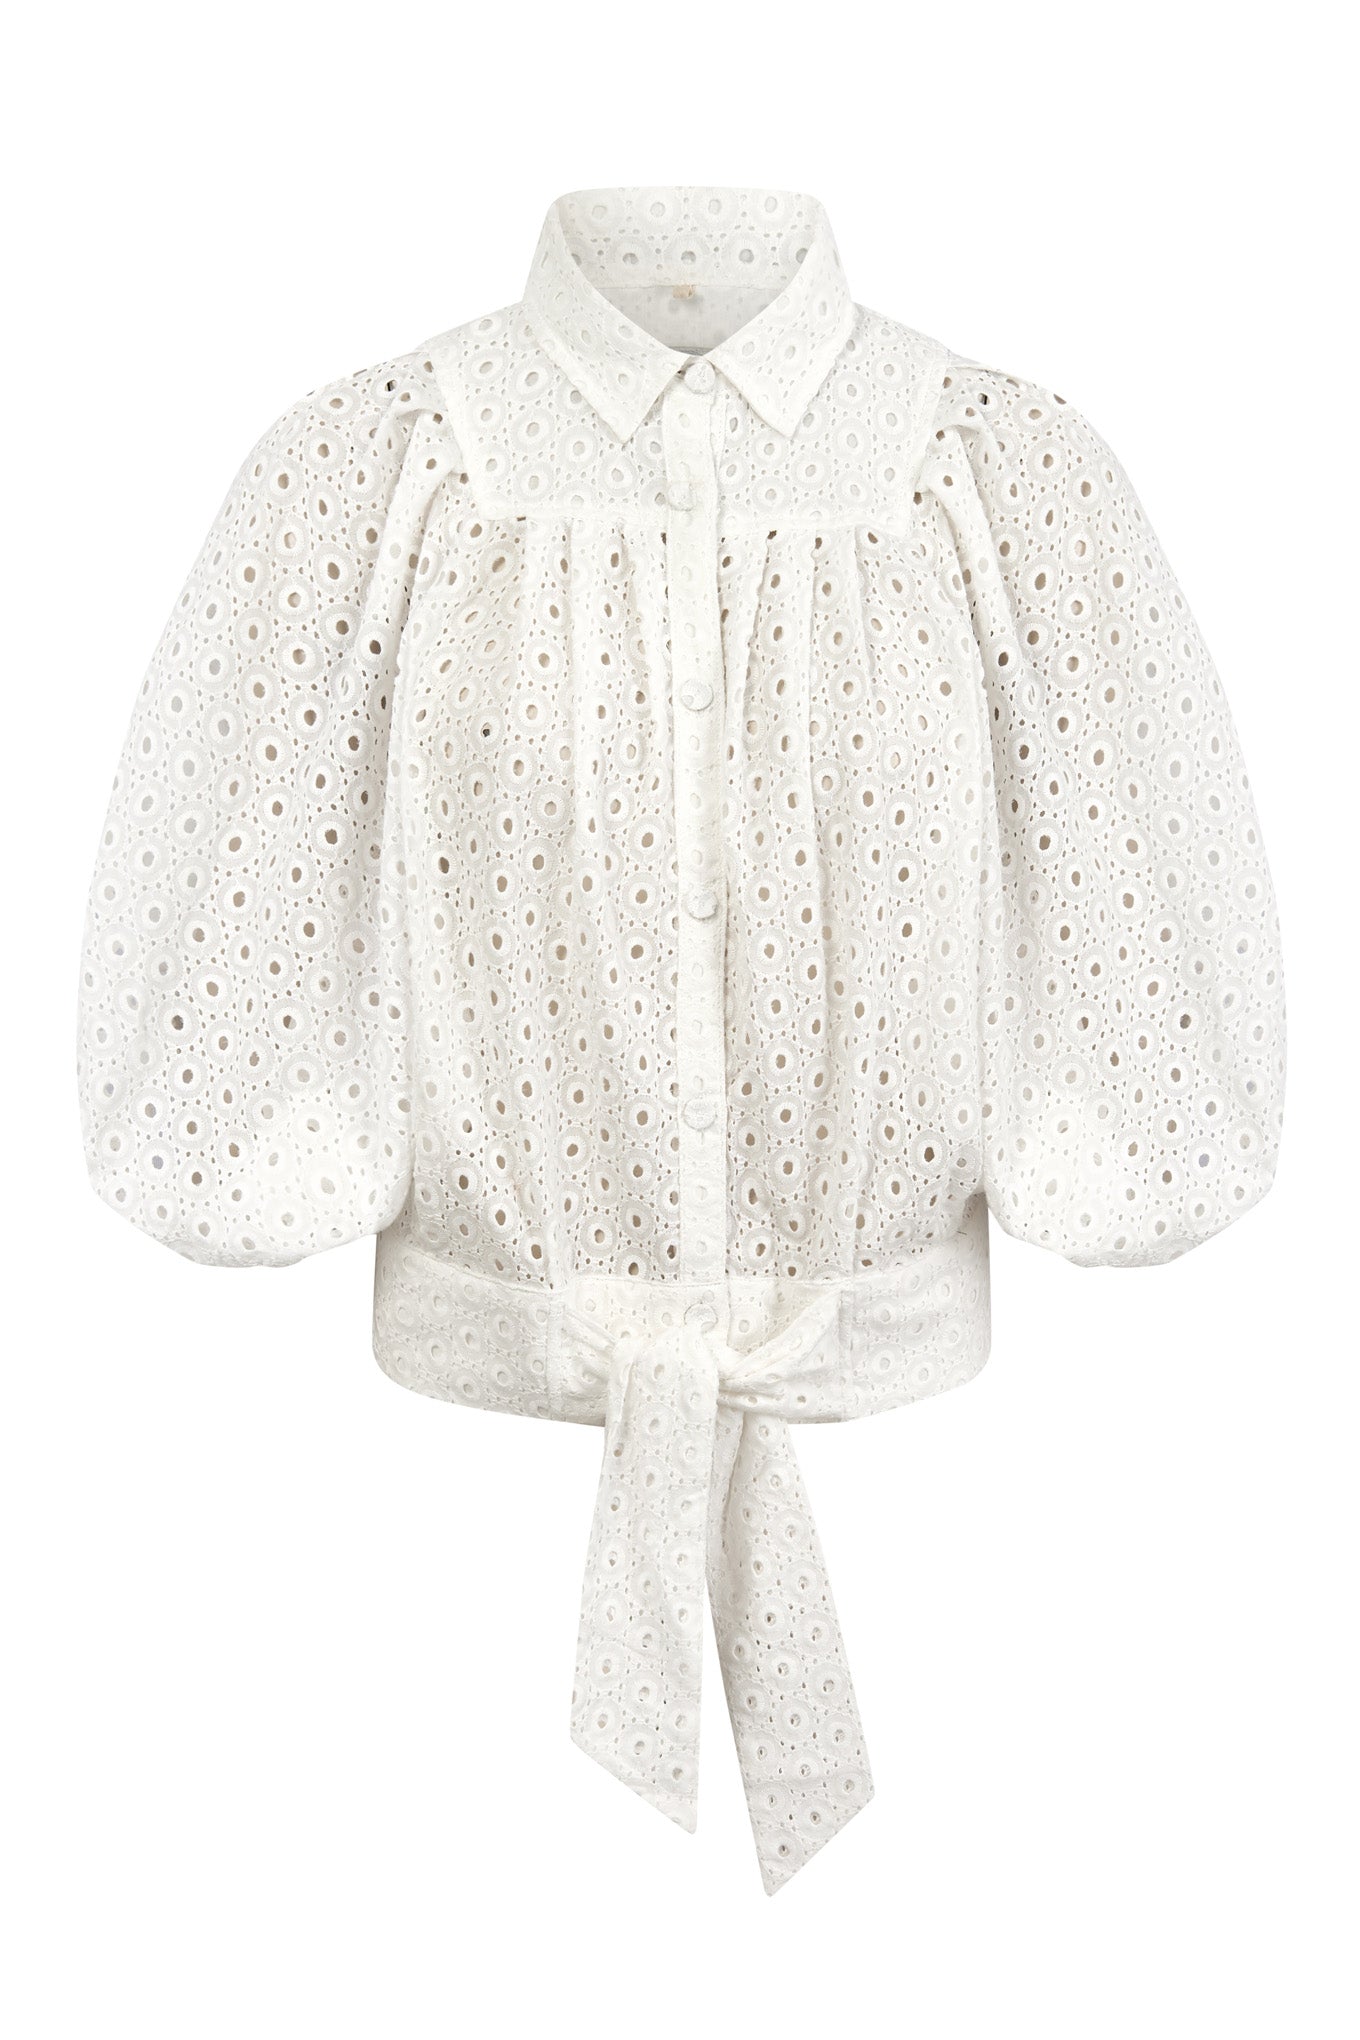 White blouse MAGIC made of organic cotton from Komodo